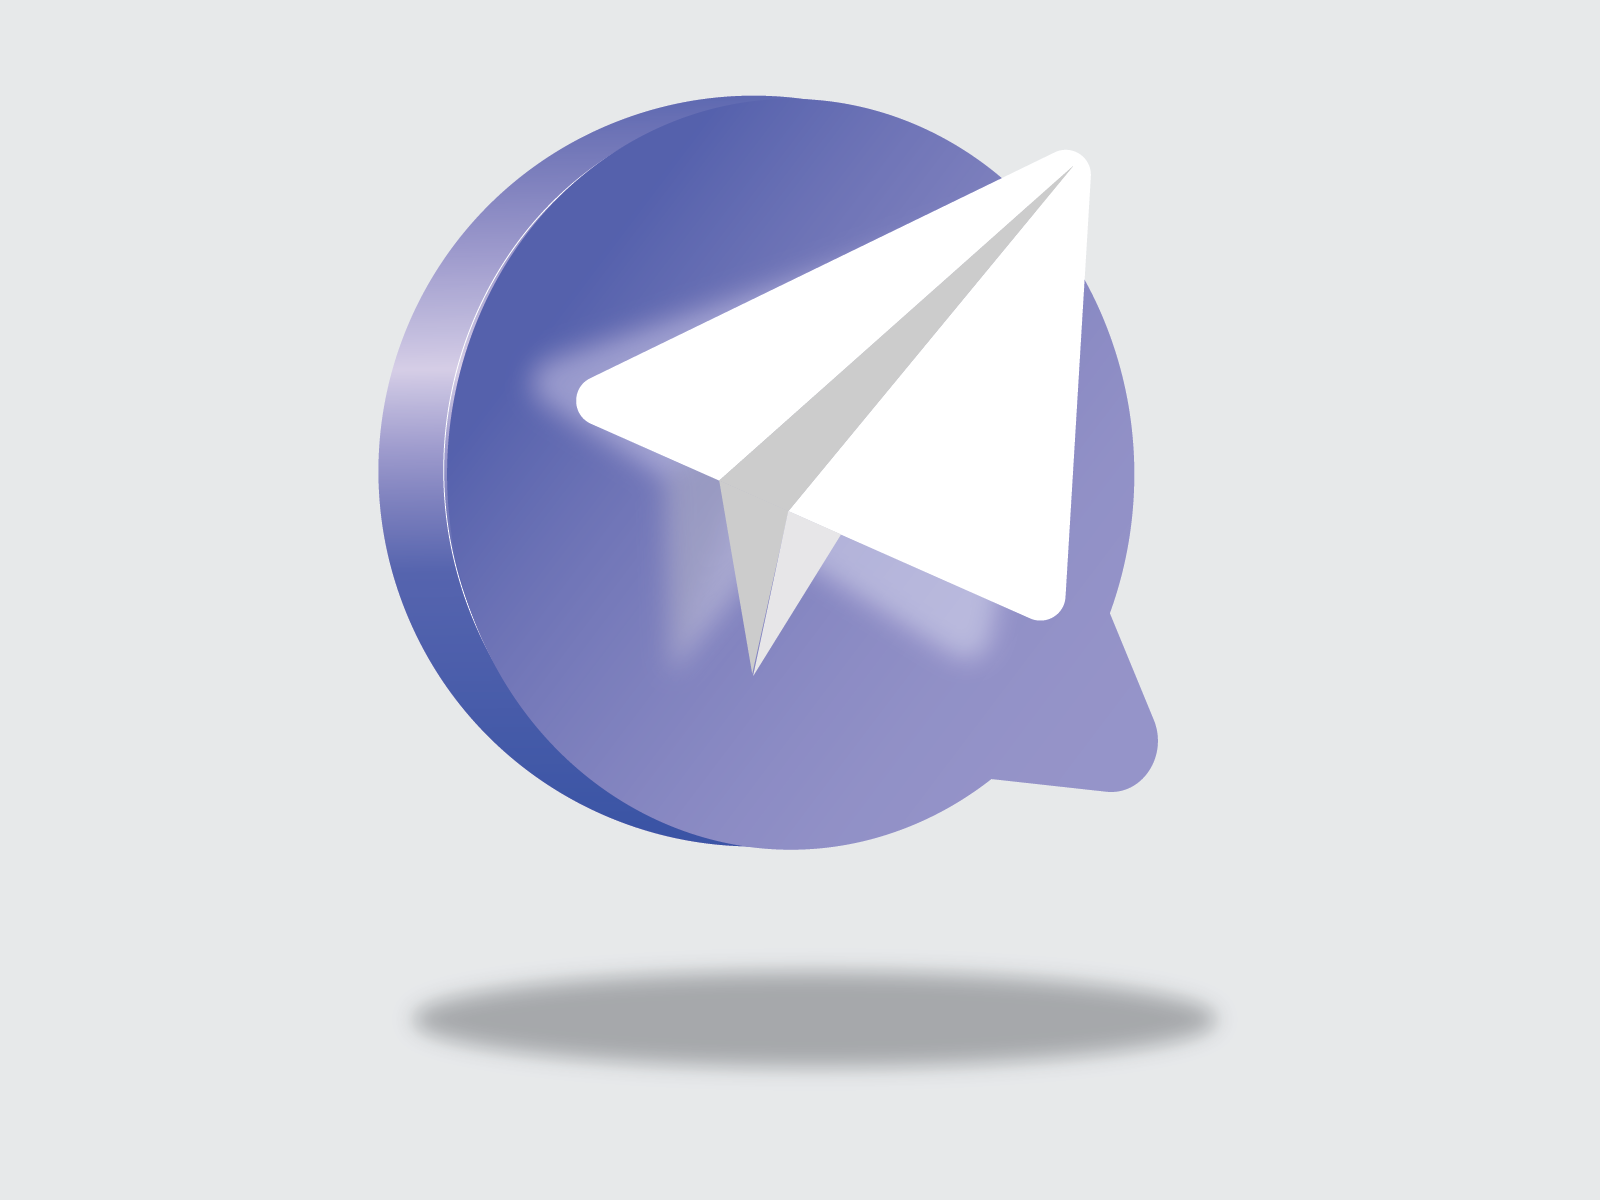 Telegram pictures. Логотип телеграмм. Пиктограмма телеграмм. Телеграм значок 3d. Телега логотип.